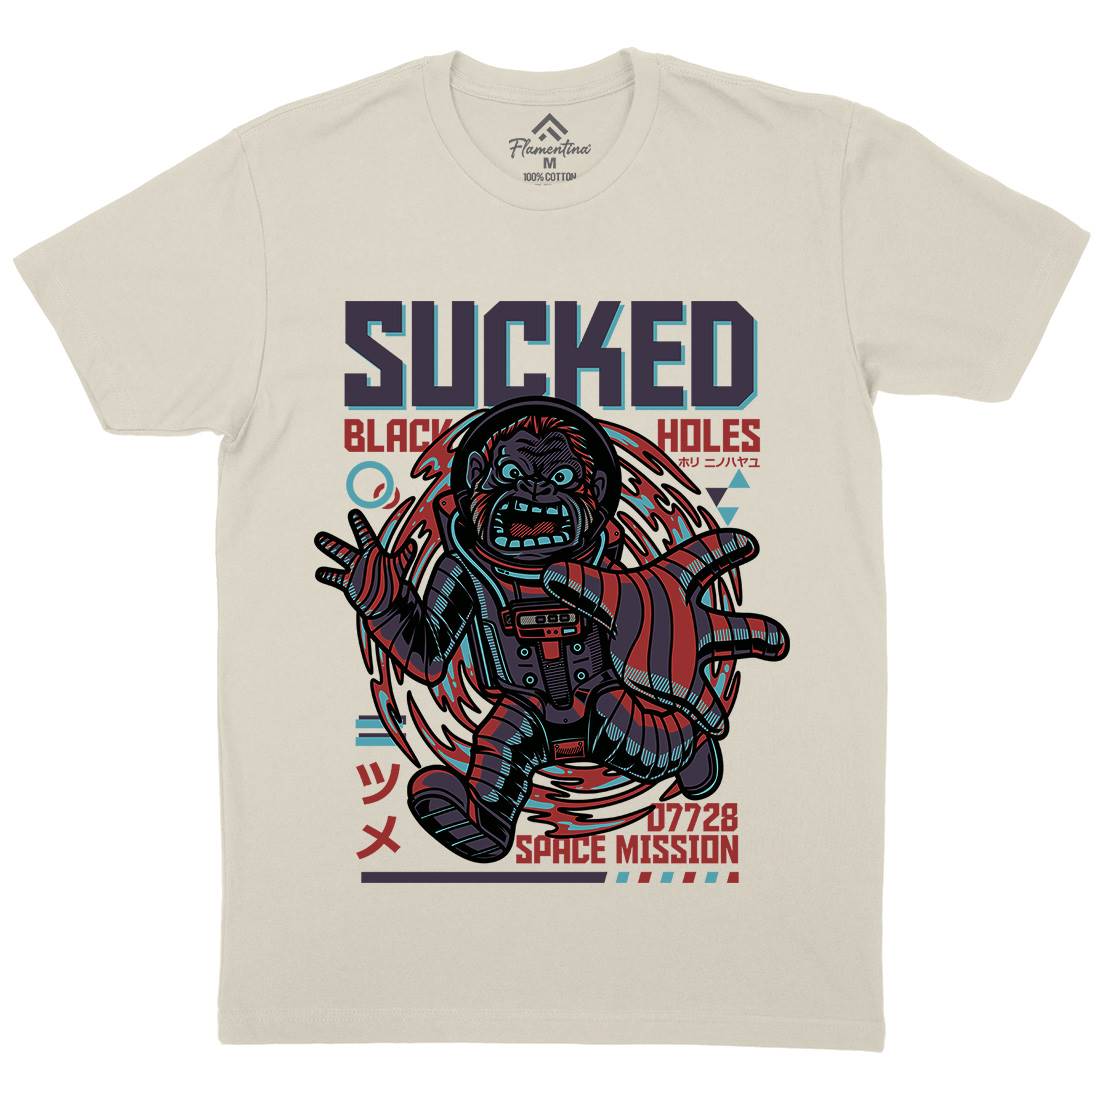 Sucked Black Holes Mens Organic Crew Neck T-Shirt Space D842